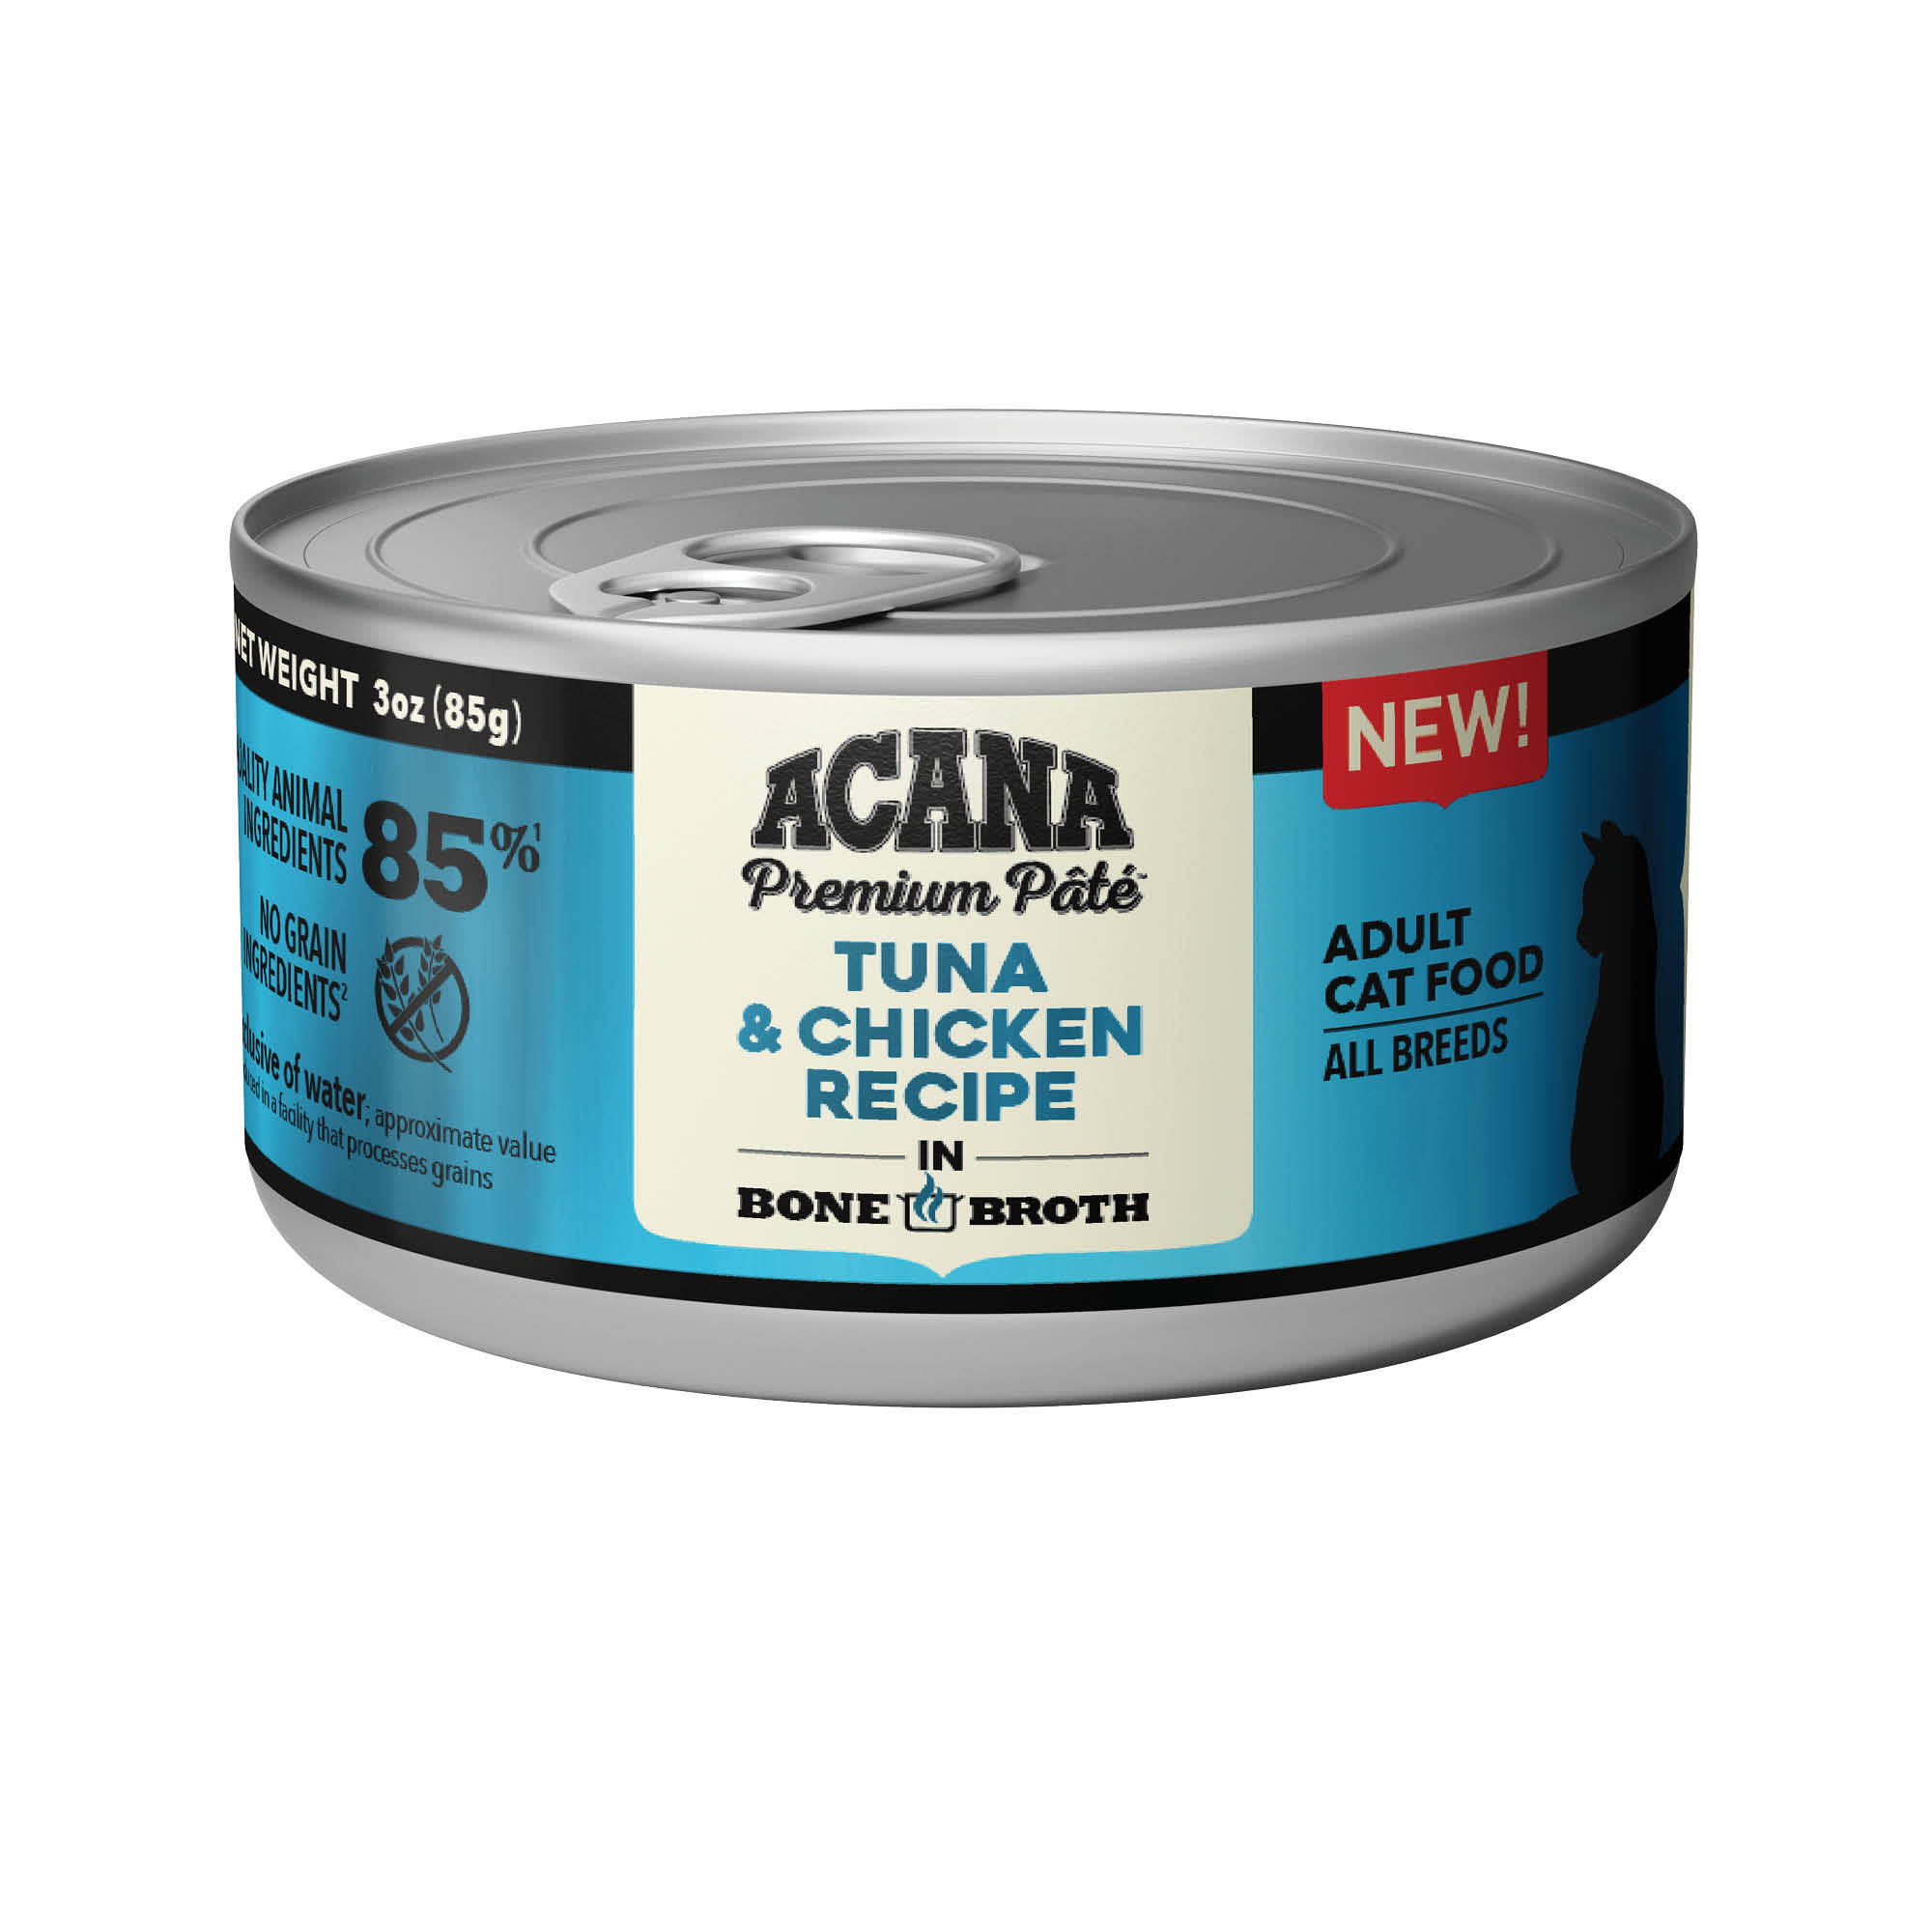 Acana Premium Pate, Tuna & Chicken Recipe Wet Food for Adult Cats